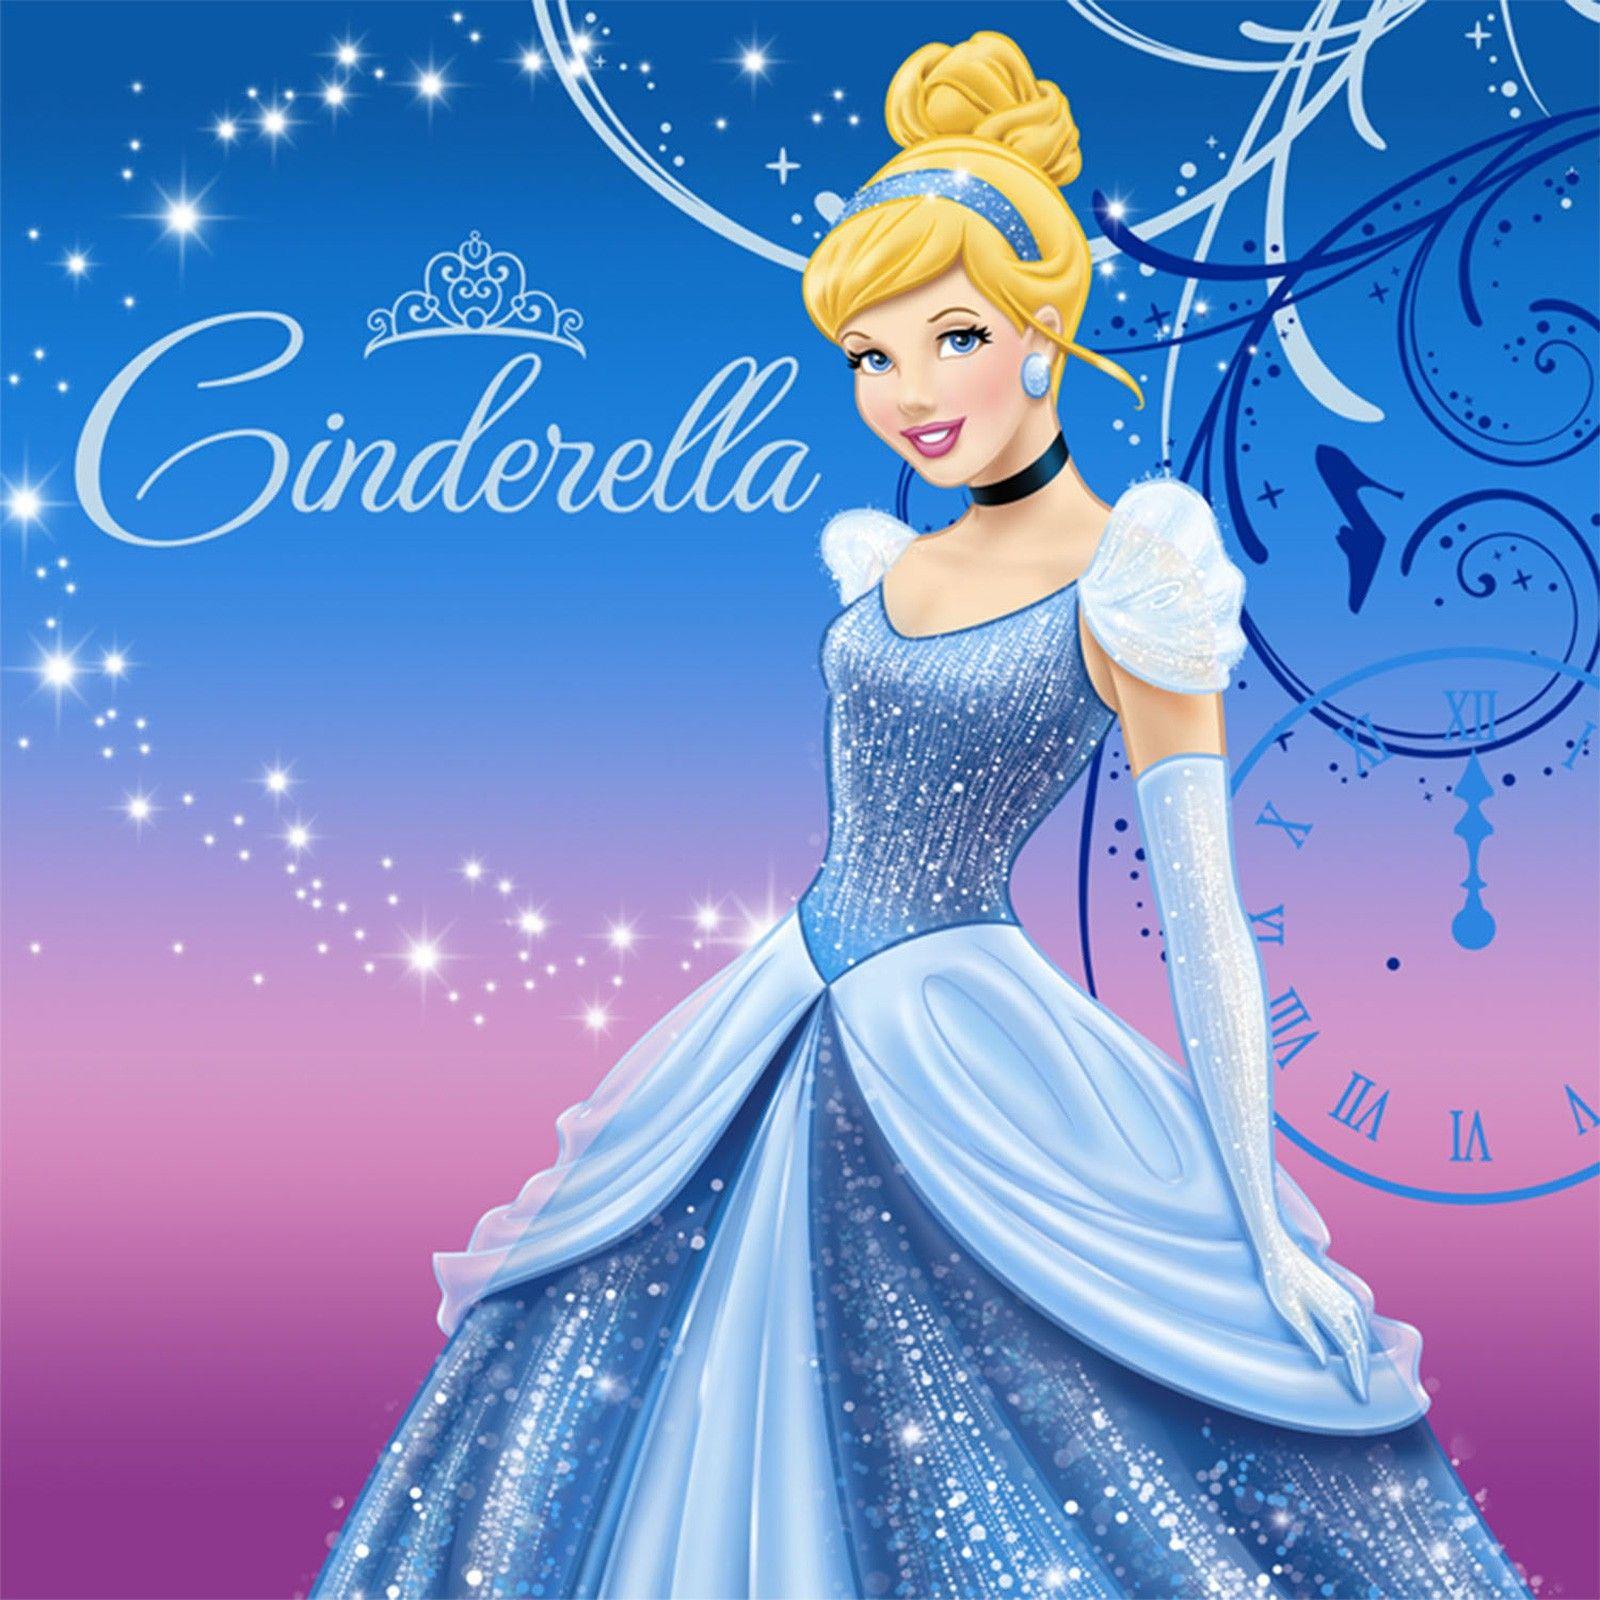 Kids Cartoons: Disney princess Cinderella wallpaper & cartoon video